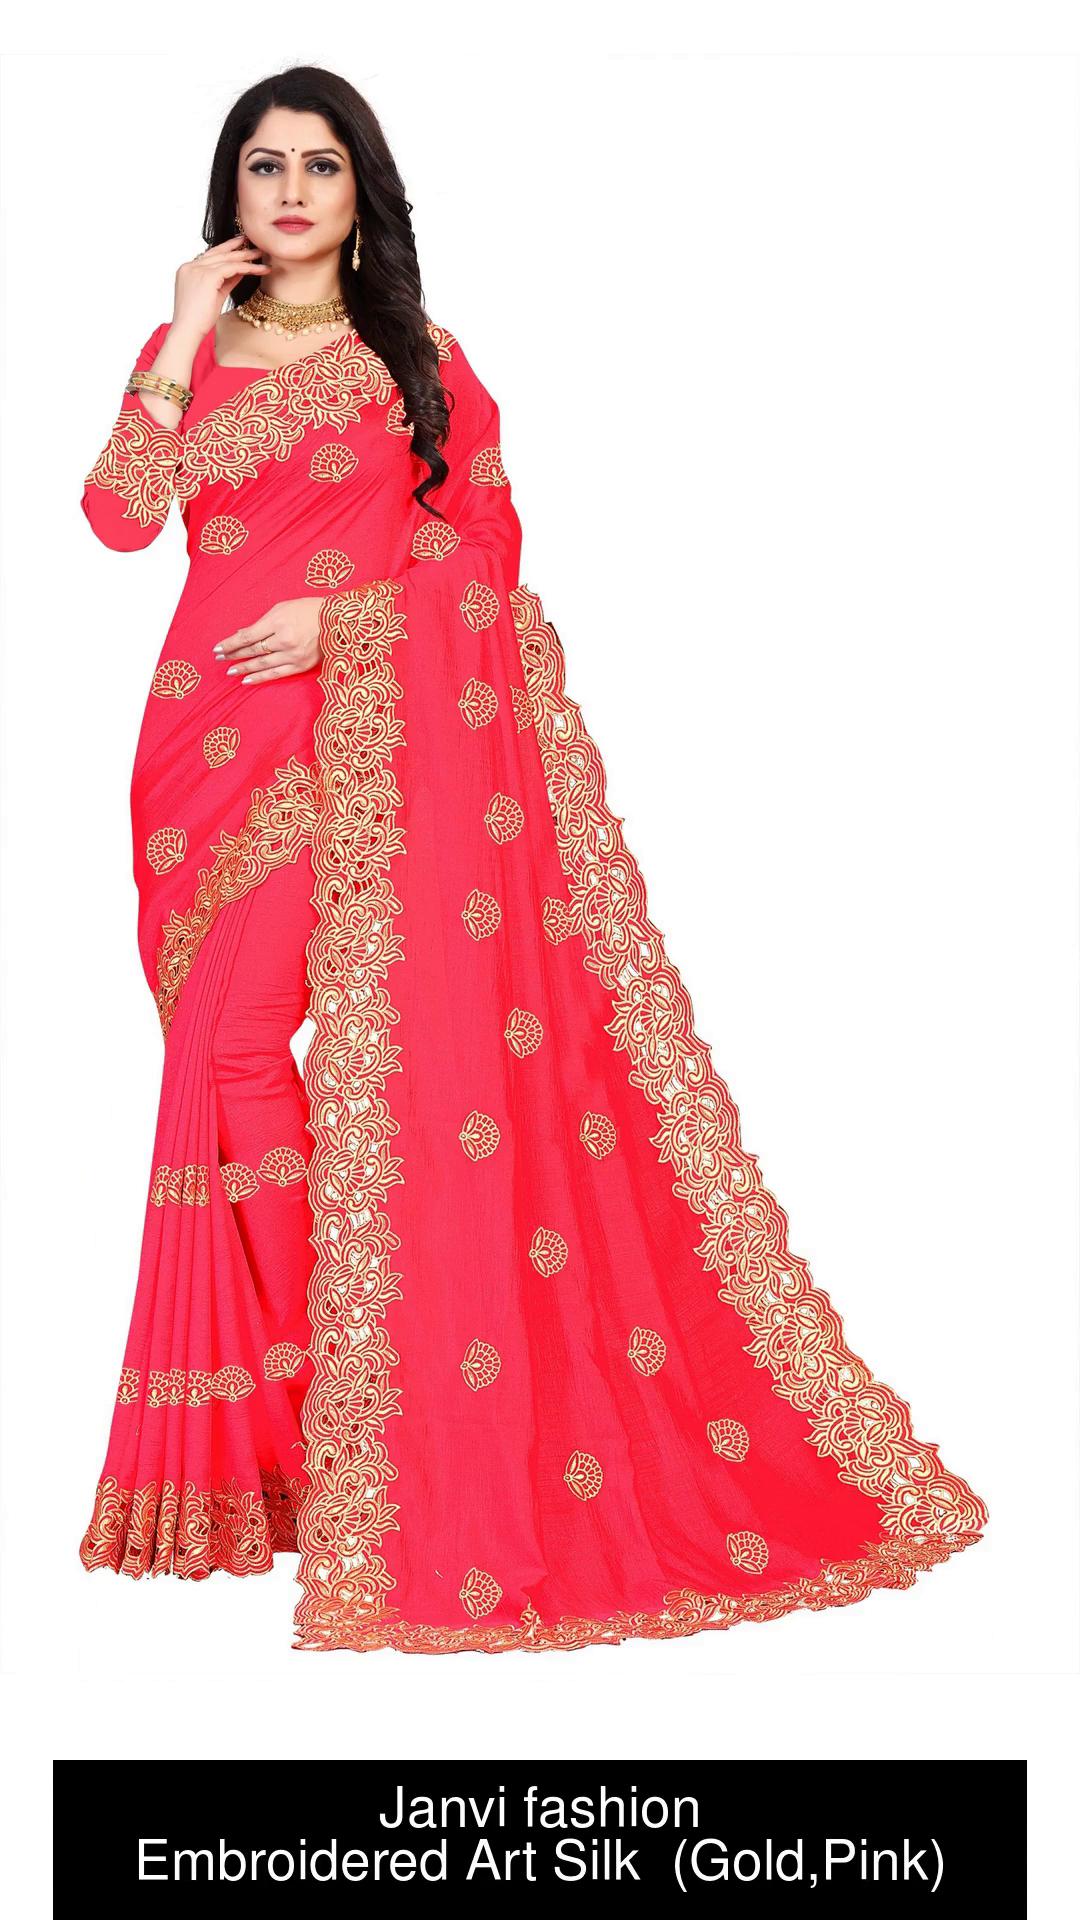 Love for Saree - Jaanvi fashion